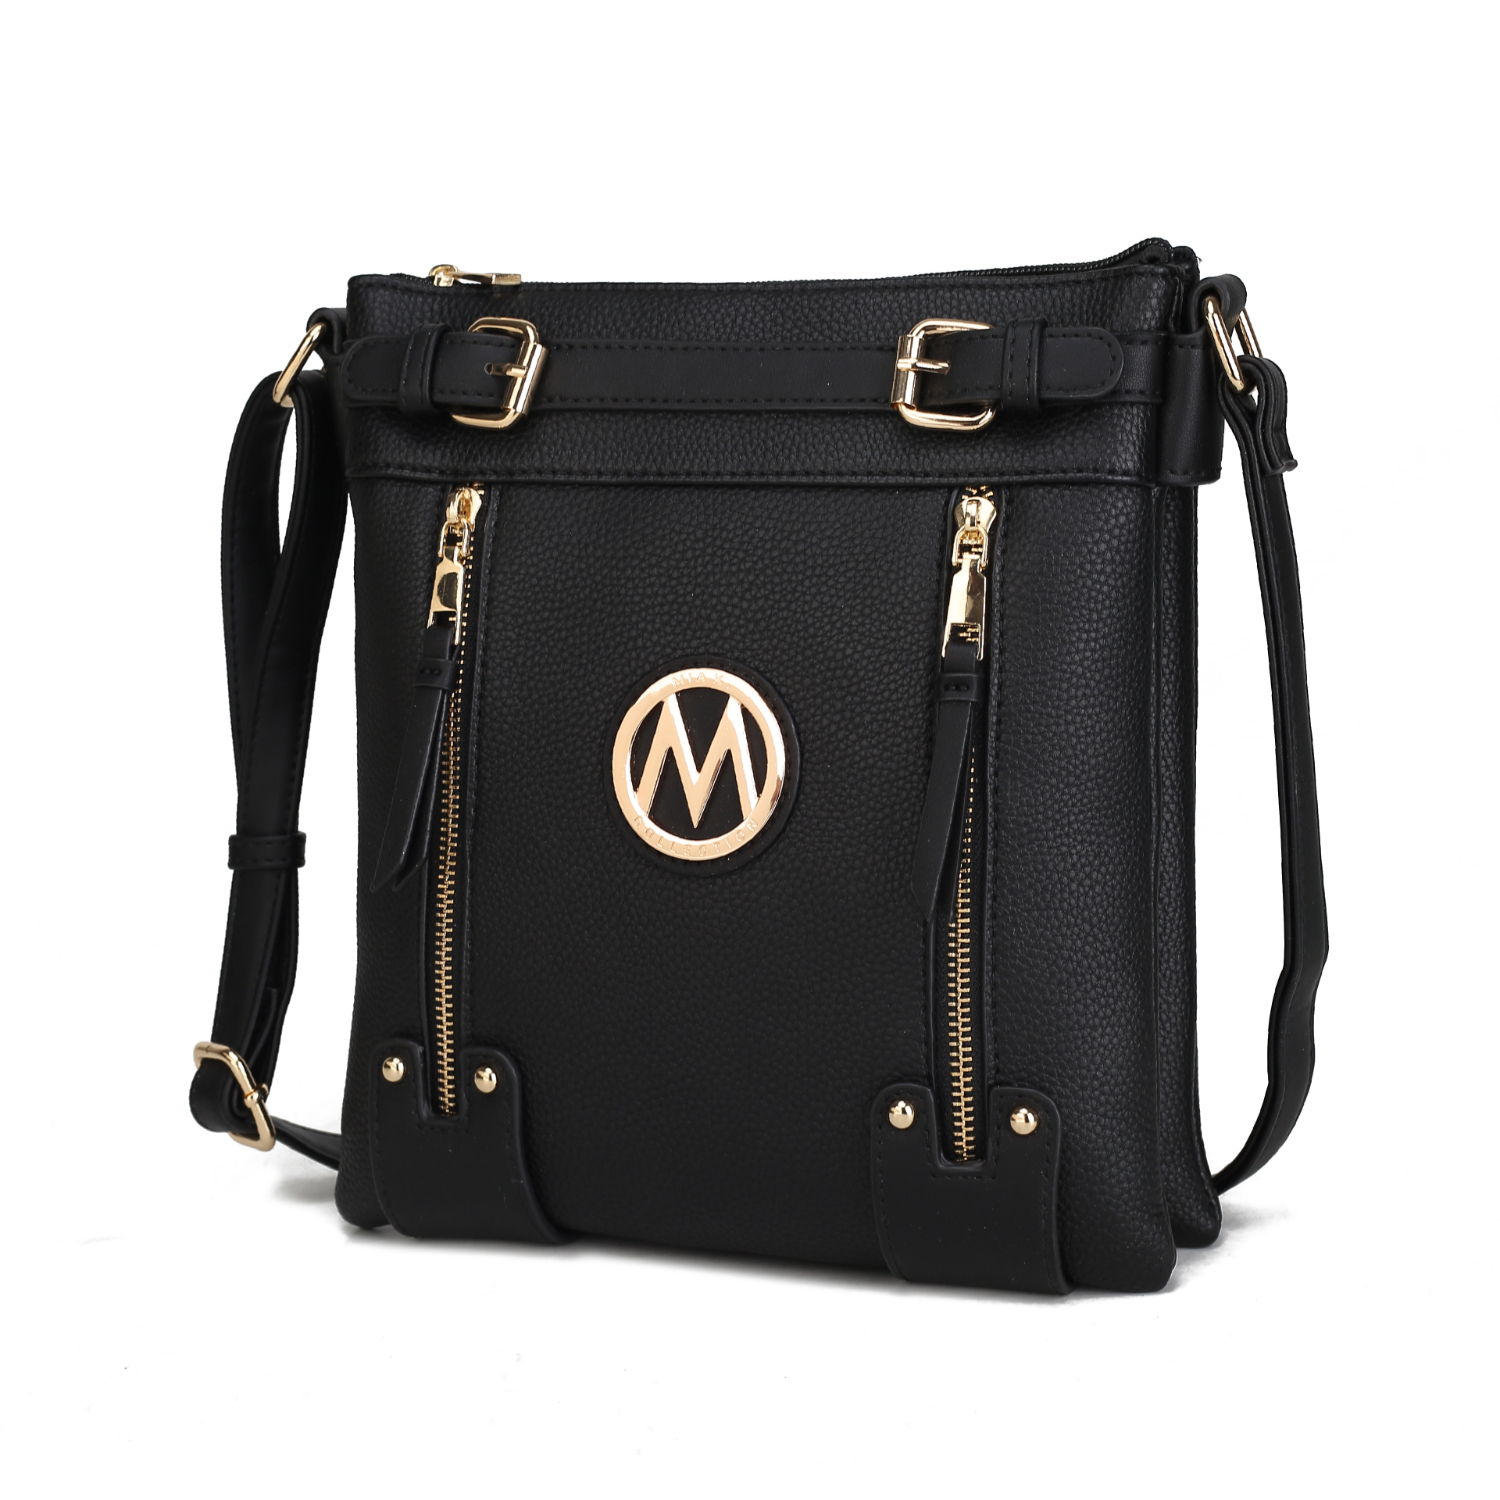 MKF Collection Lilian Crossbody Handbag By Mia K - Seafoam